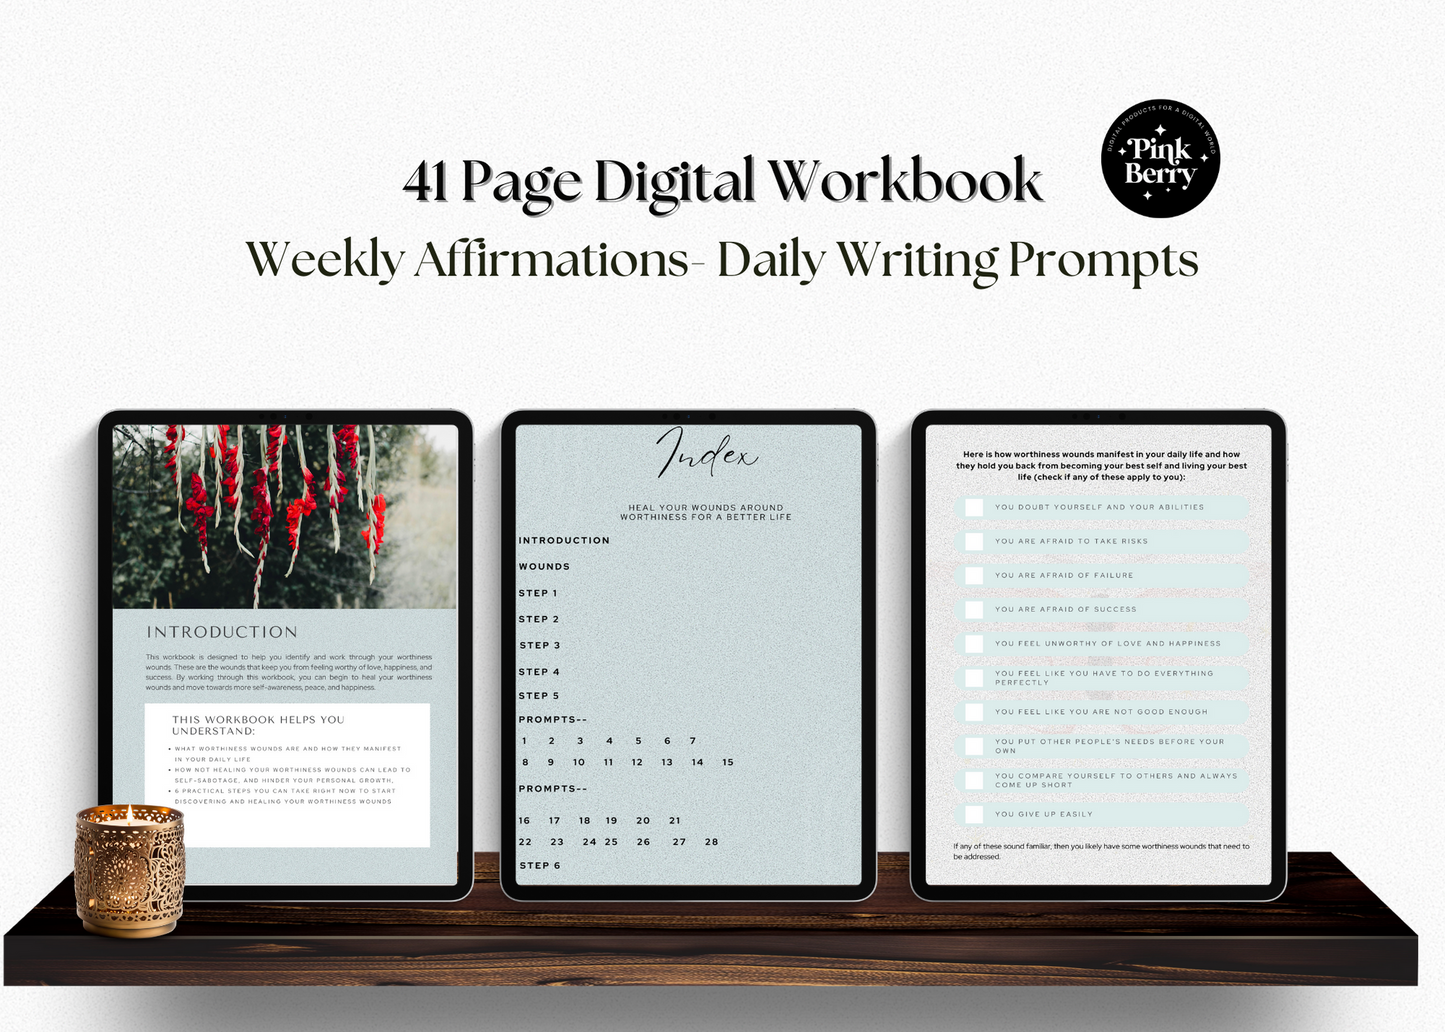 PLR Digital Workbook For Goodnotes/ PLR Digital Planners, Inner wounds workbook